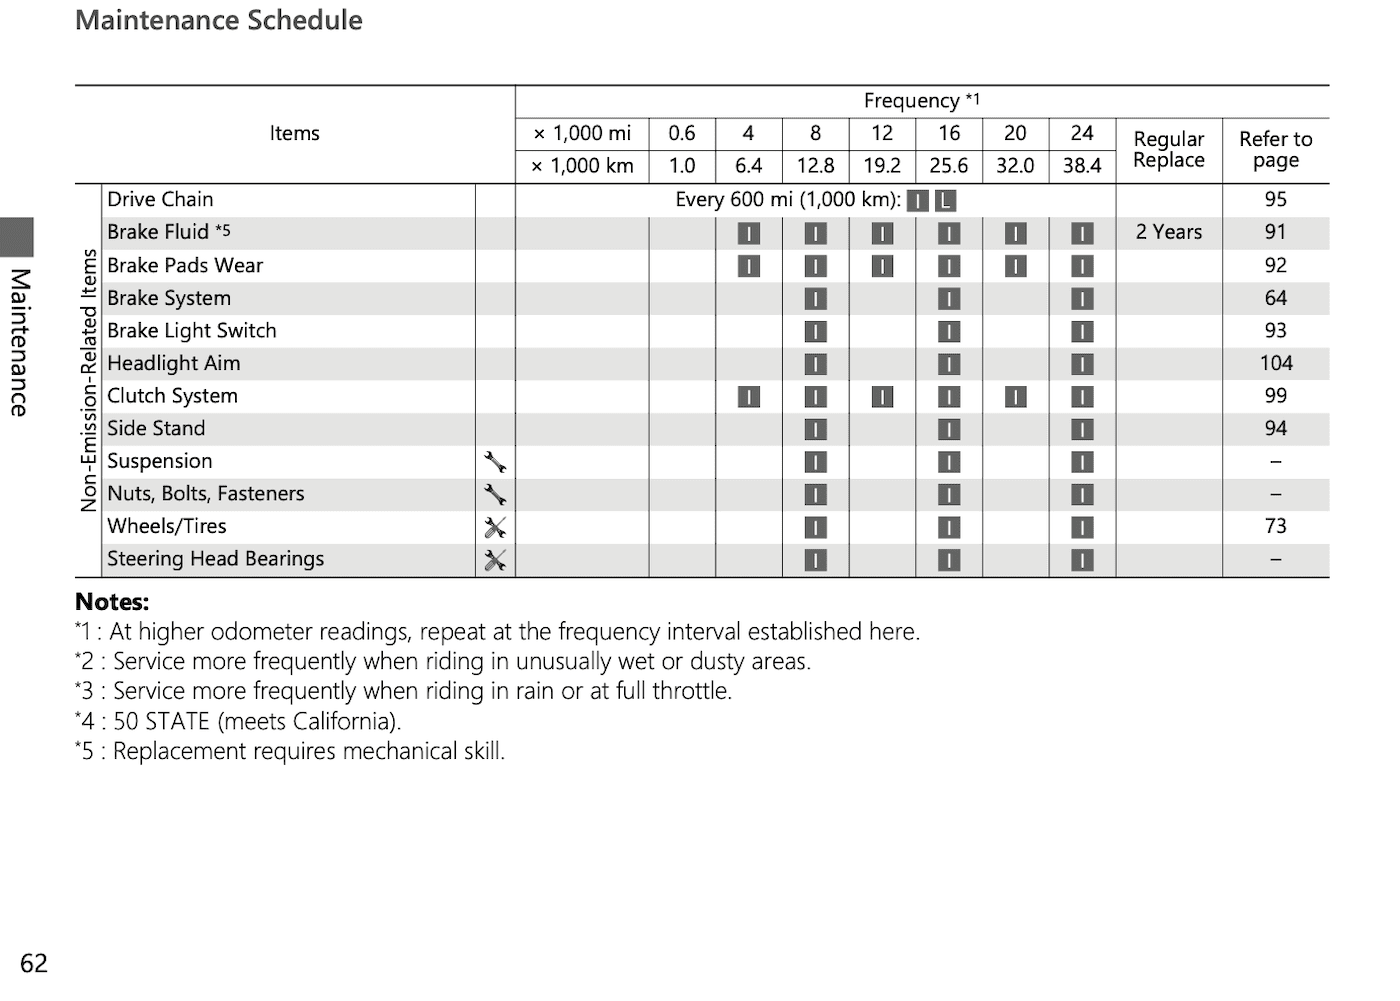 2019 Honda CB500F maintenance schedule page 2